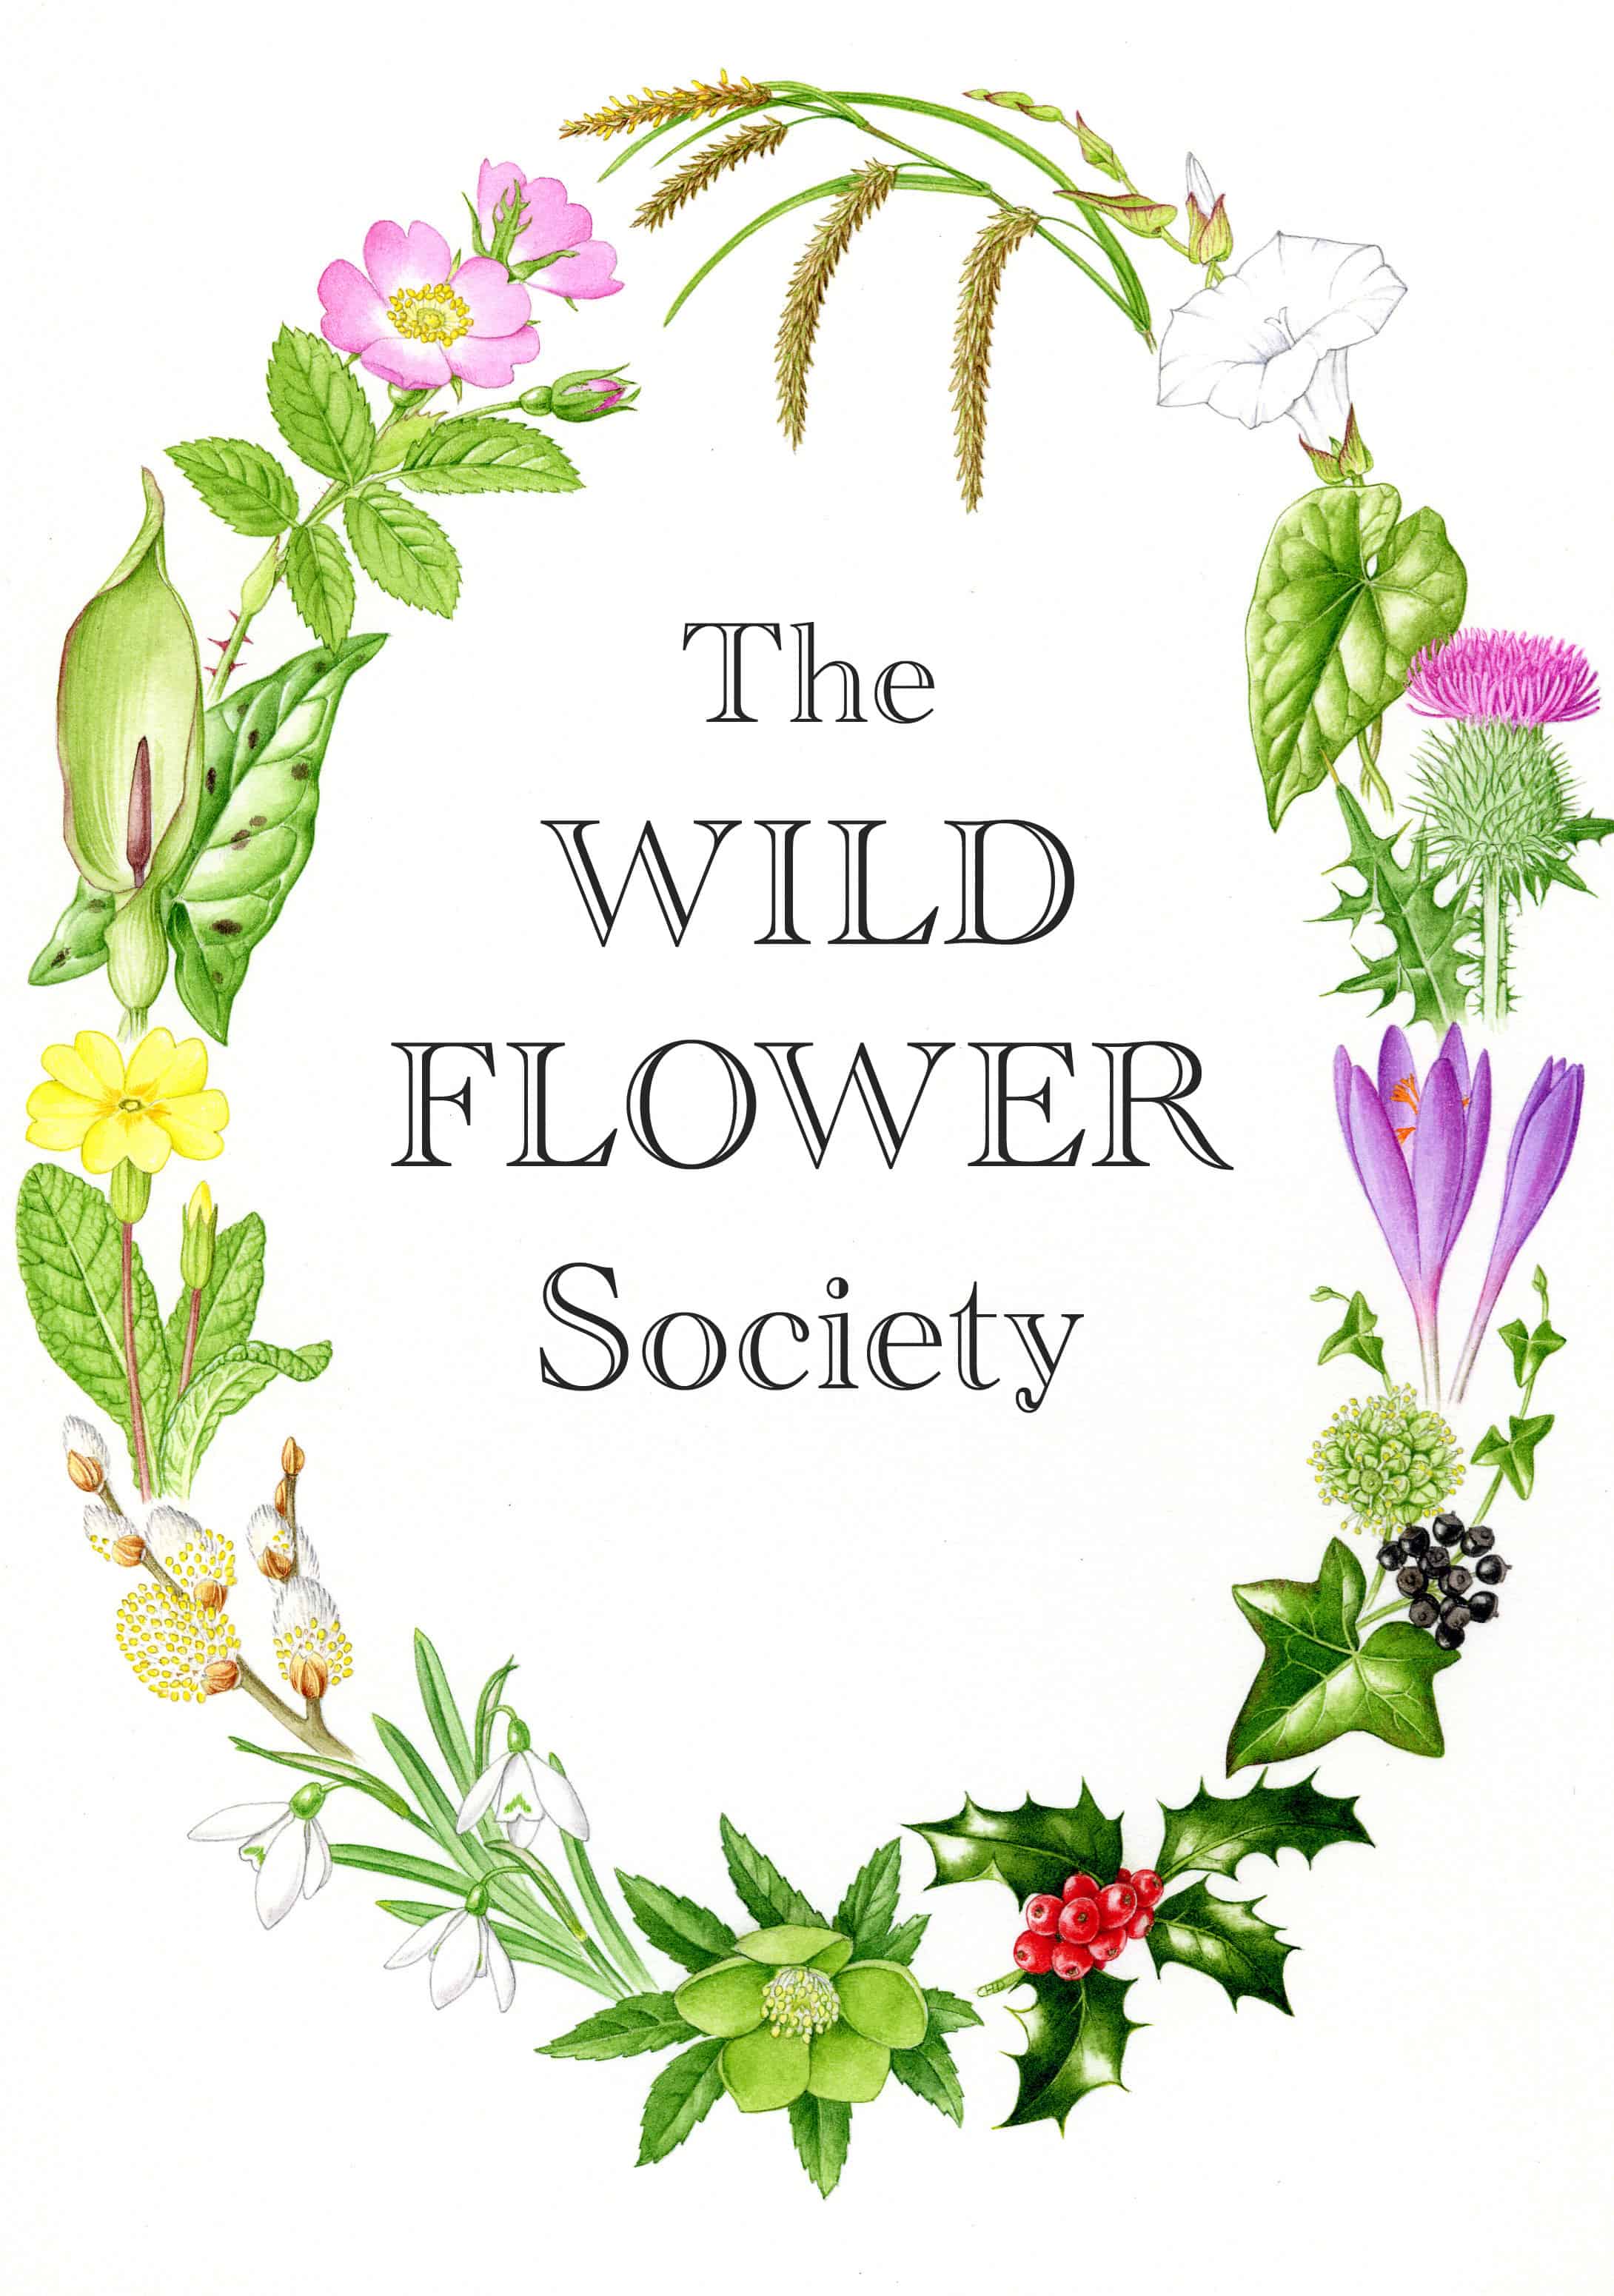 Wildflowers – Field Studies Council